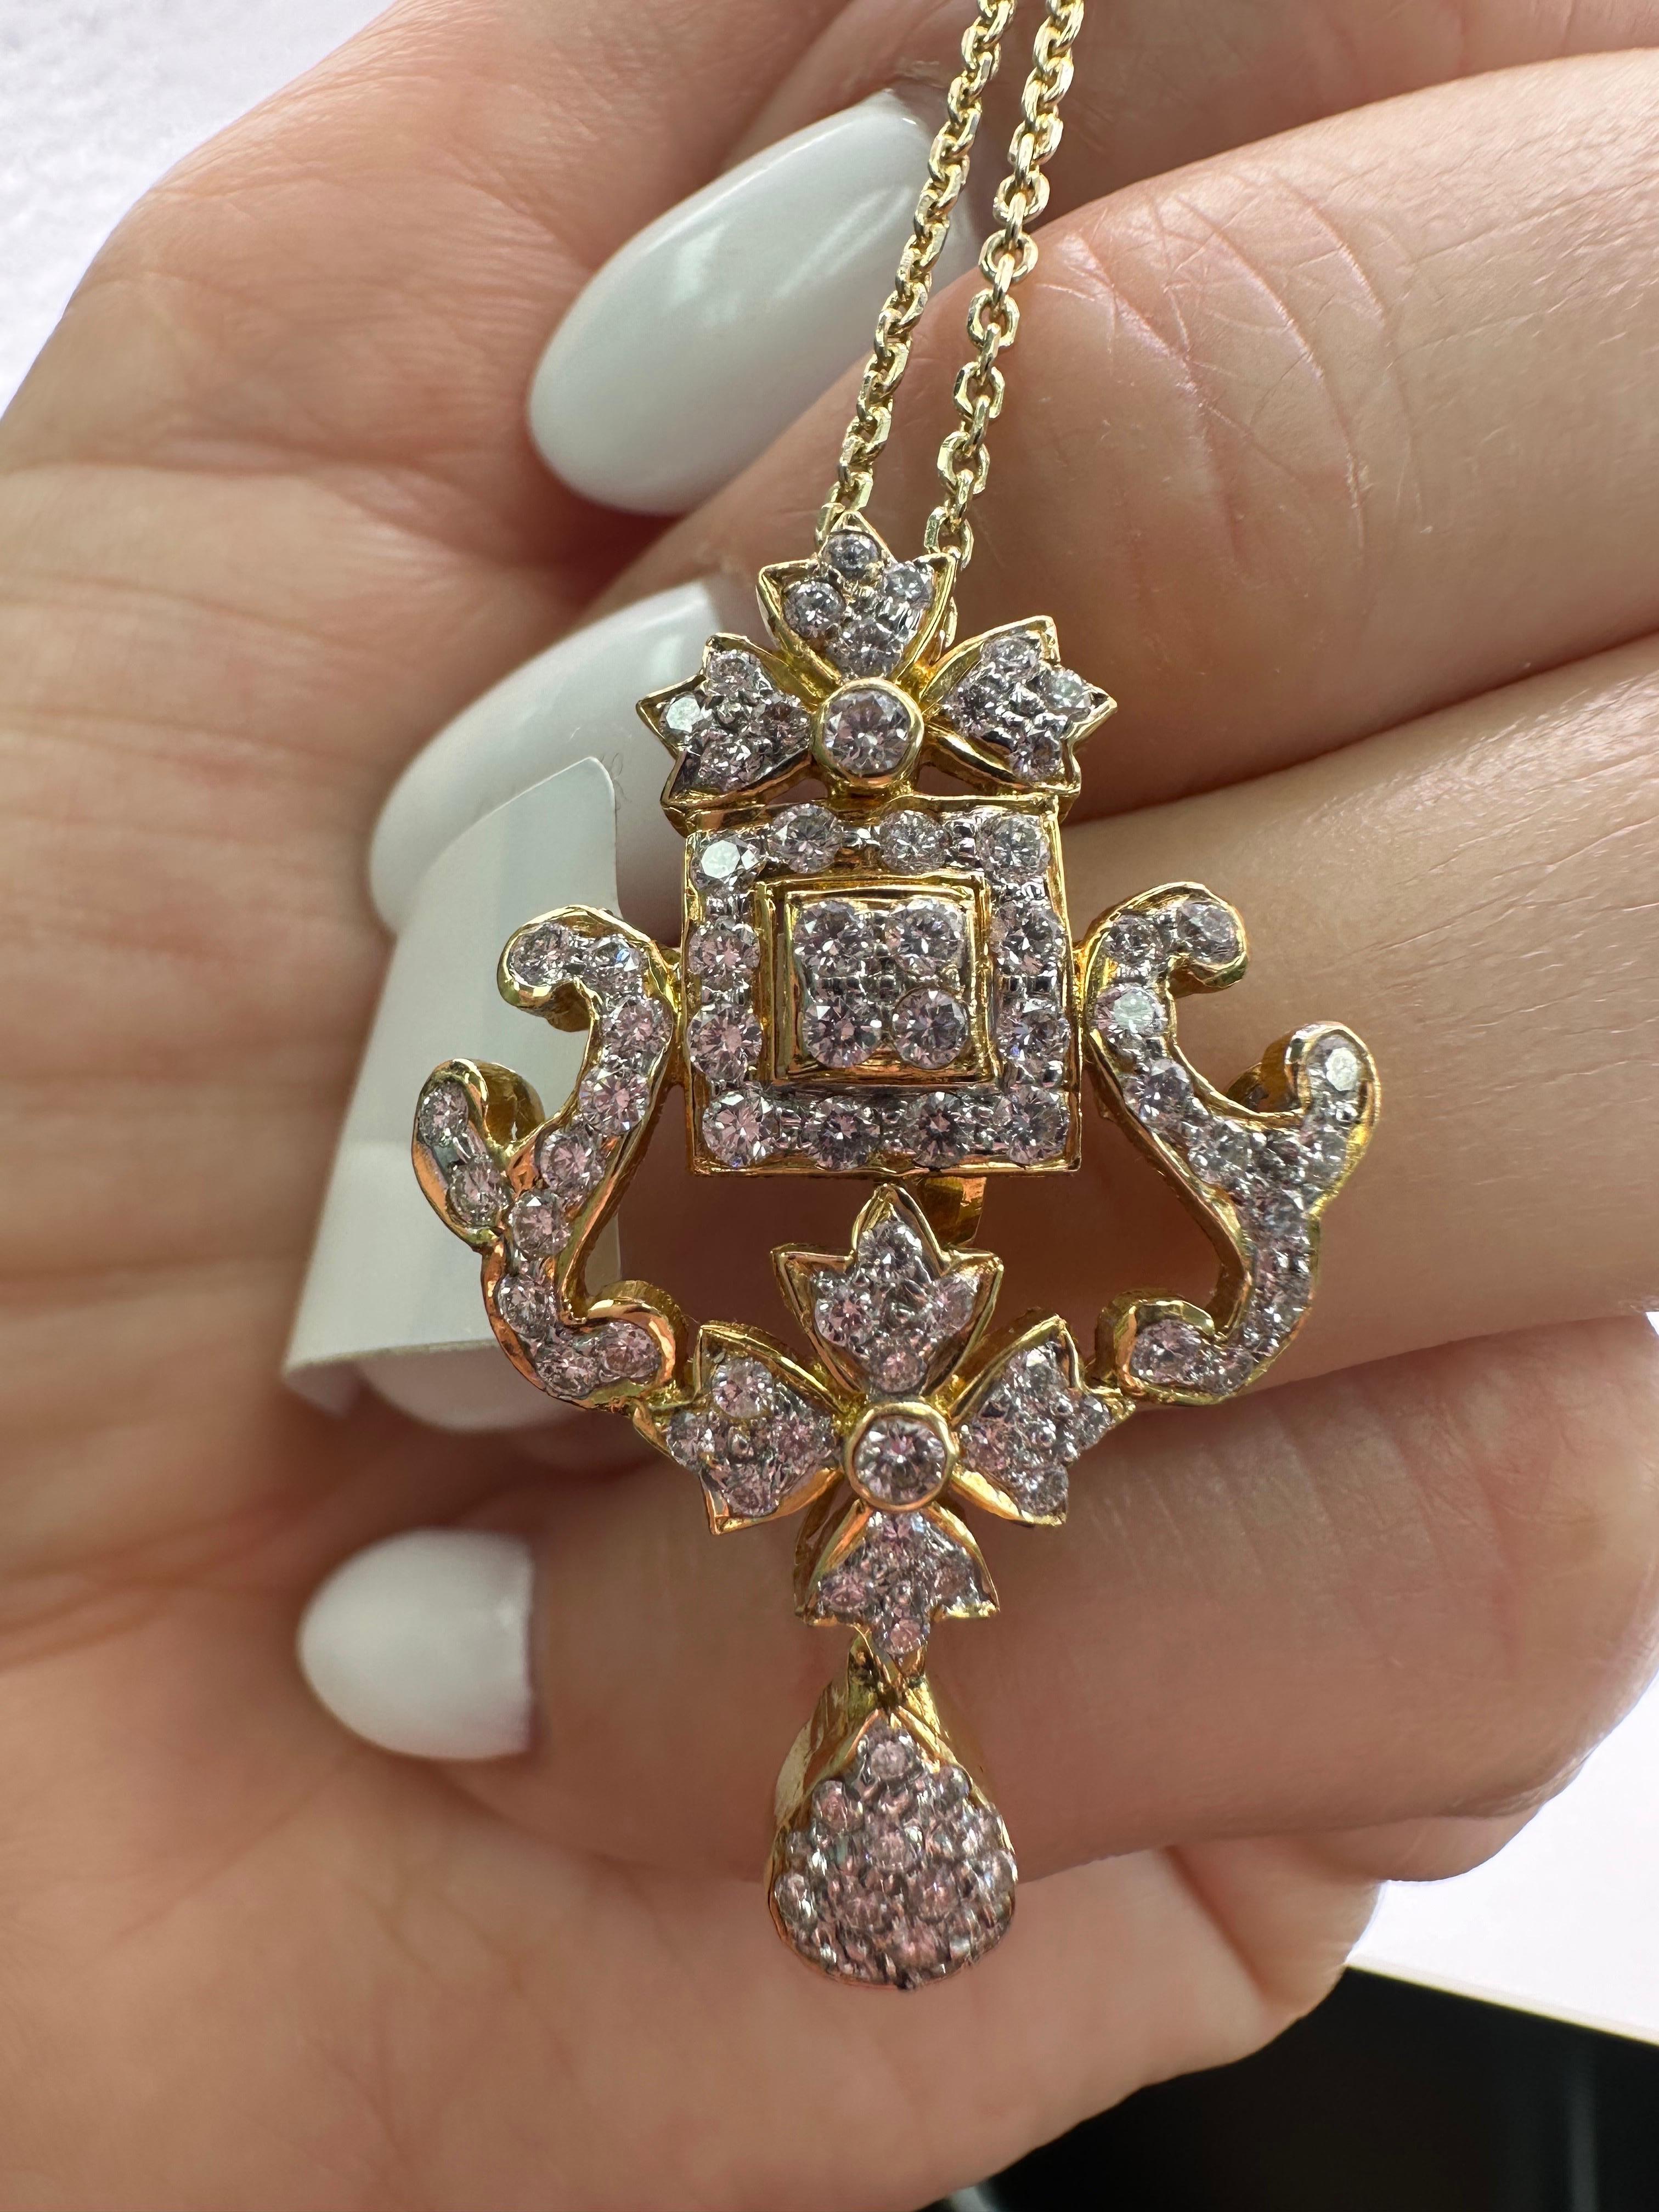 1ct Vintage diamond pendant necklace 18KT yellow gold chain 18